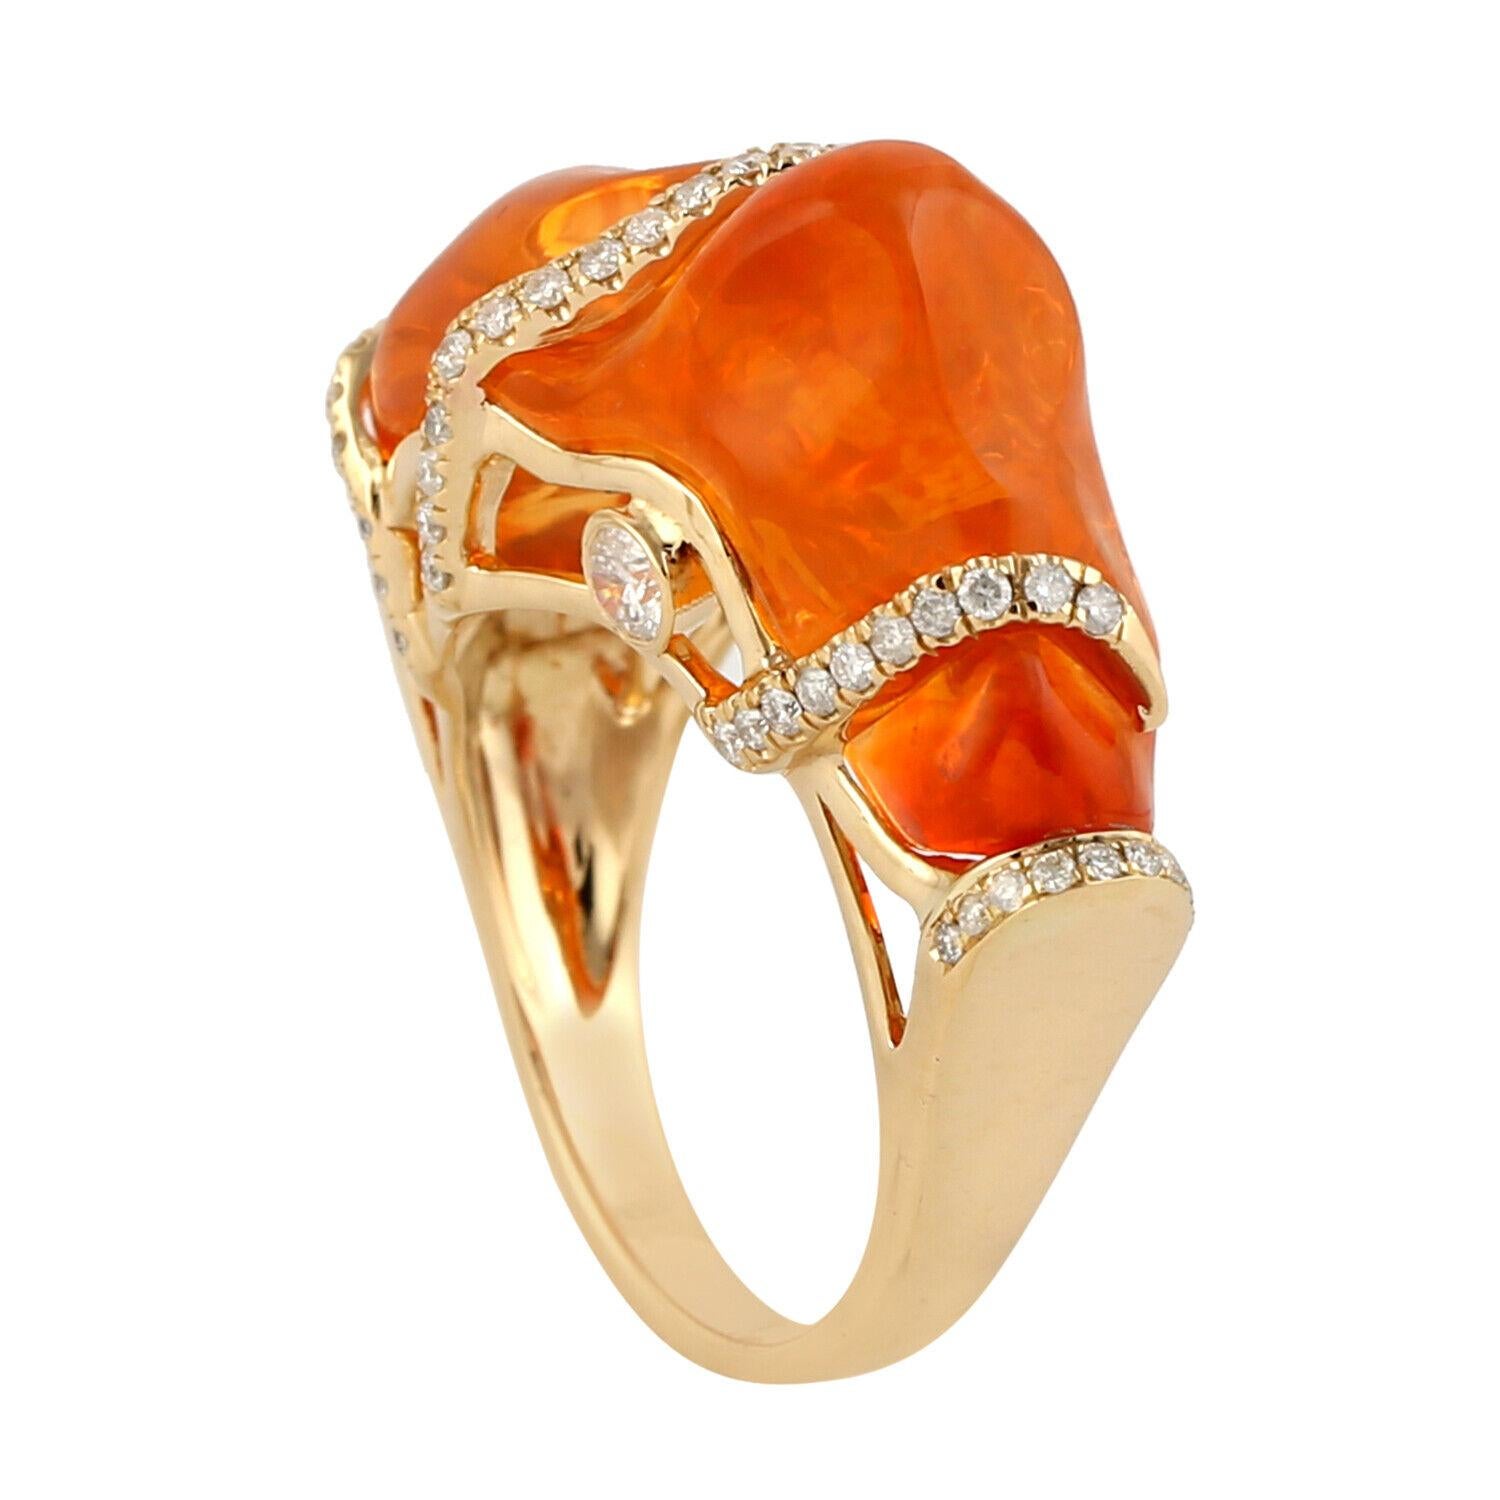 Modern Meghna Jewels 14.19 carat Fire Opal Diamond 18k Yellow Gold Diamond Ring For Sale